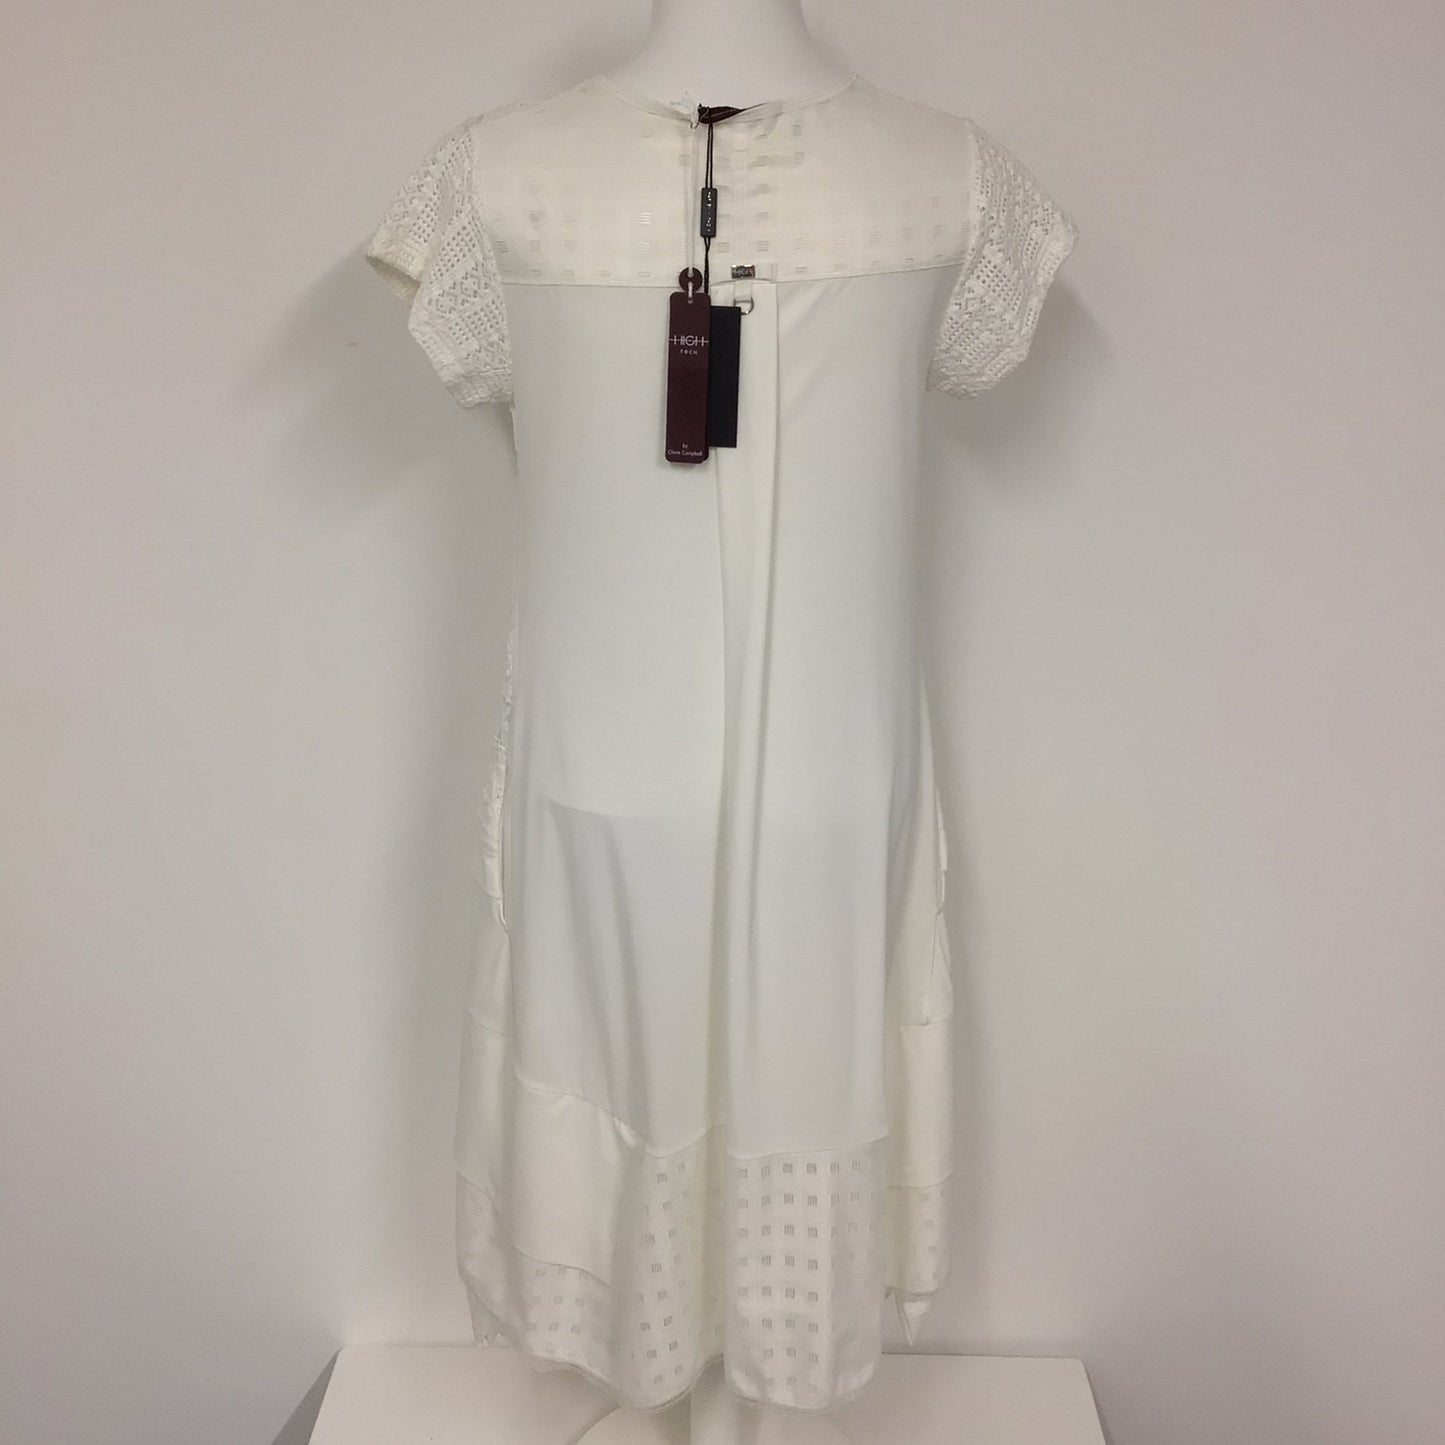 BNWT High Tech Abito Donna Cream Lace Dress w/Pockets Size 12